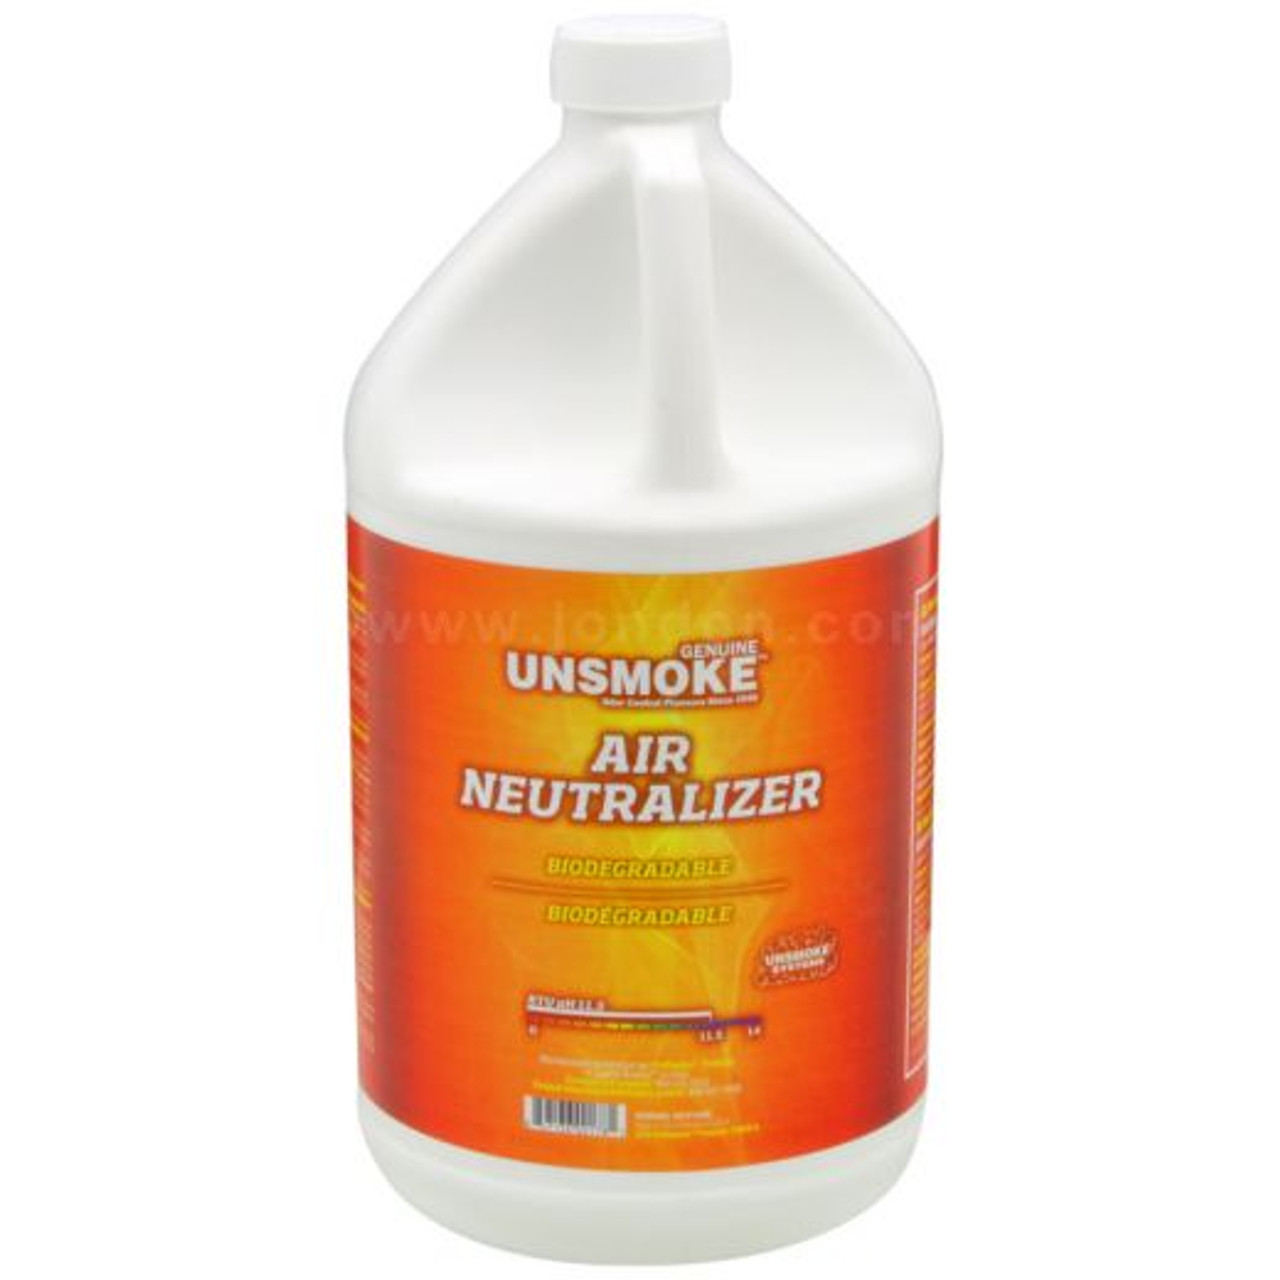 Unsmoke Air Neutralizer Biodegradable - 1gal